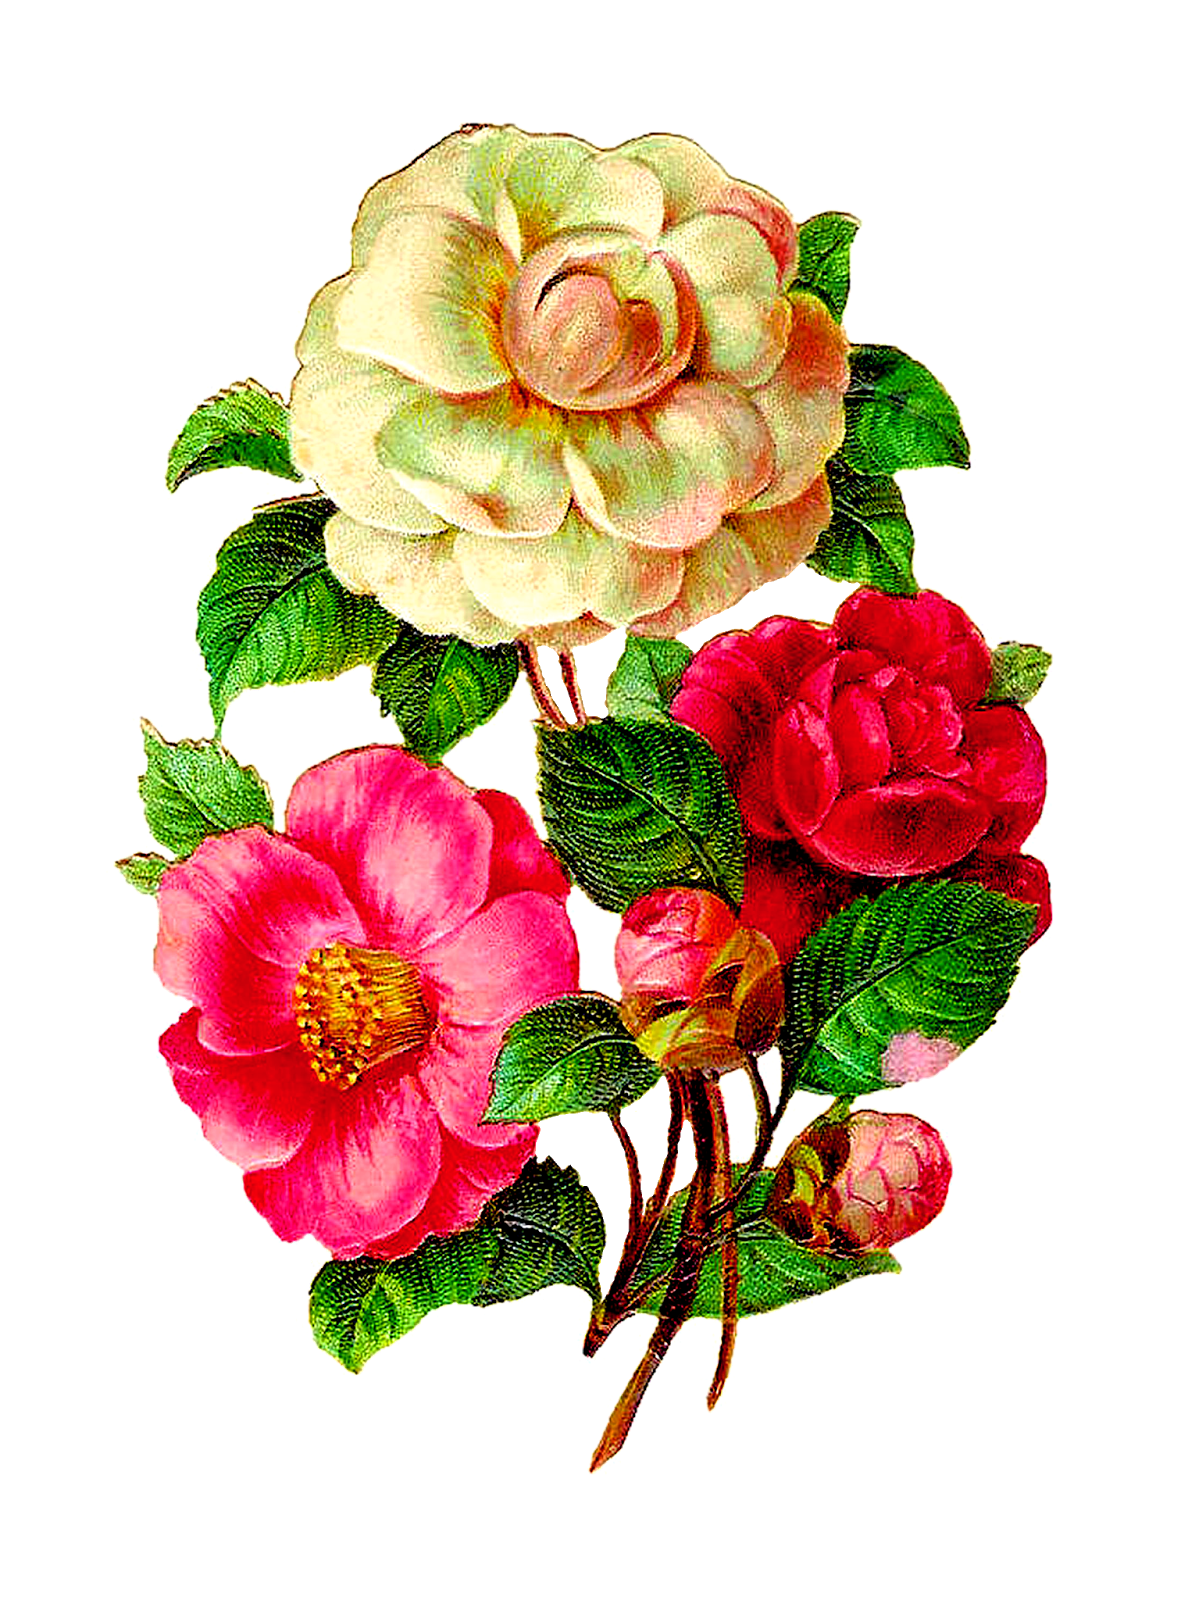 Antique Images: Scrapbooking Flower Camellia Rose Clip Art ...